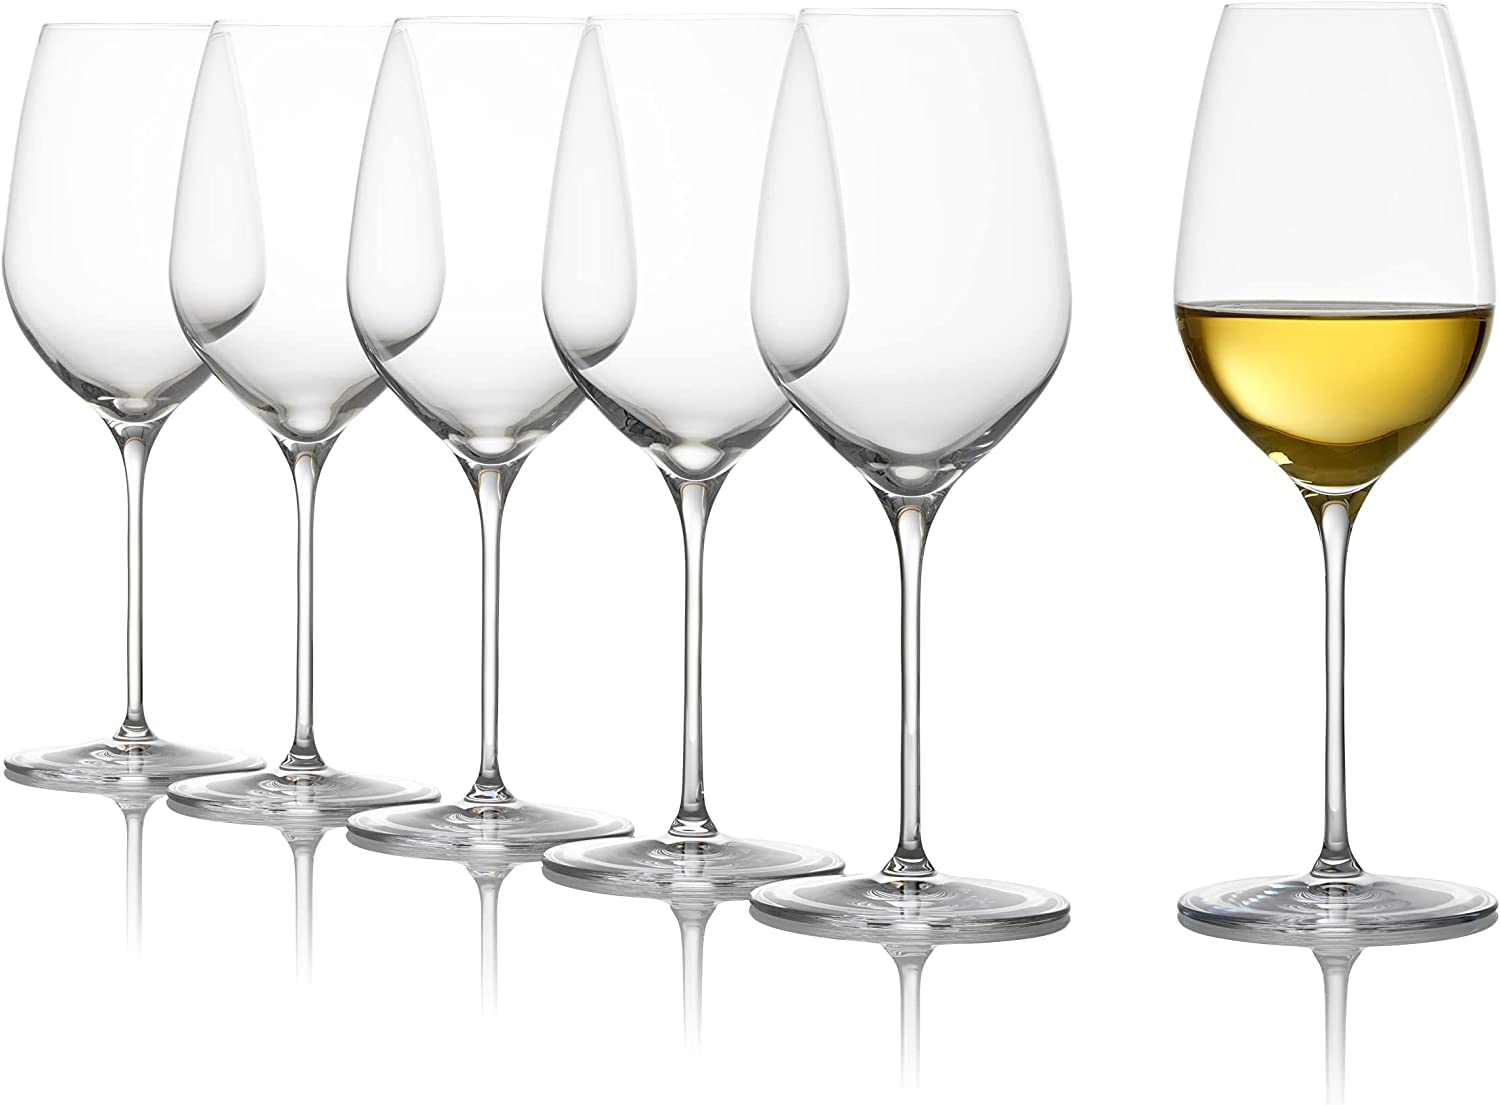 Stölzle Lausitz white wine glass fino/white wine glass 6 Set/wine glass crystal glass/elegant light white wine glass/high -quality wine glass set/wine glasses Stölzle